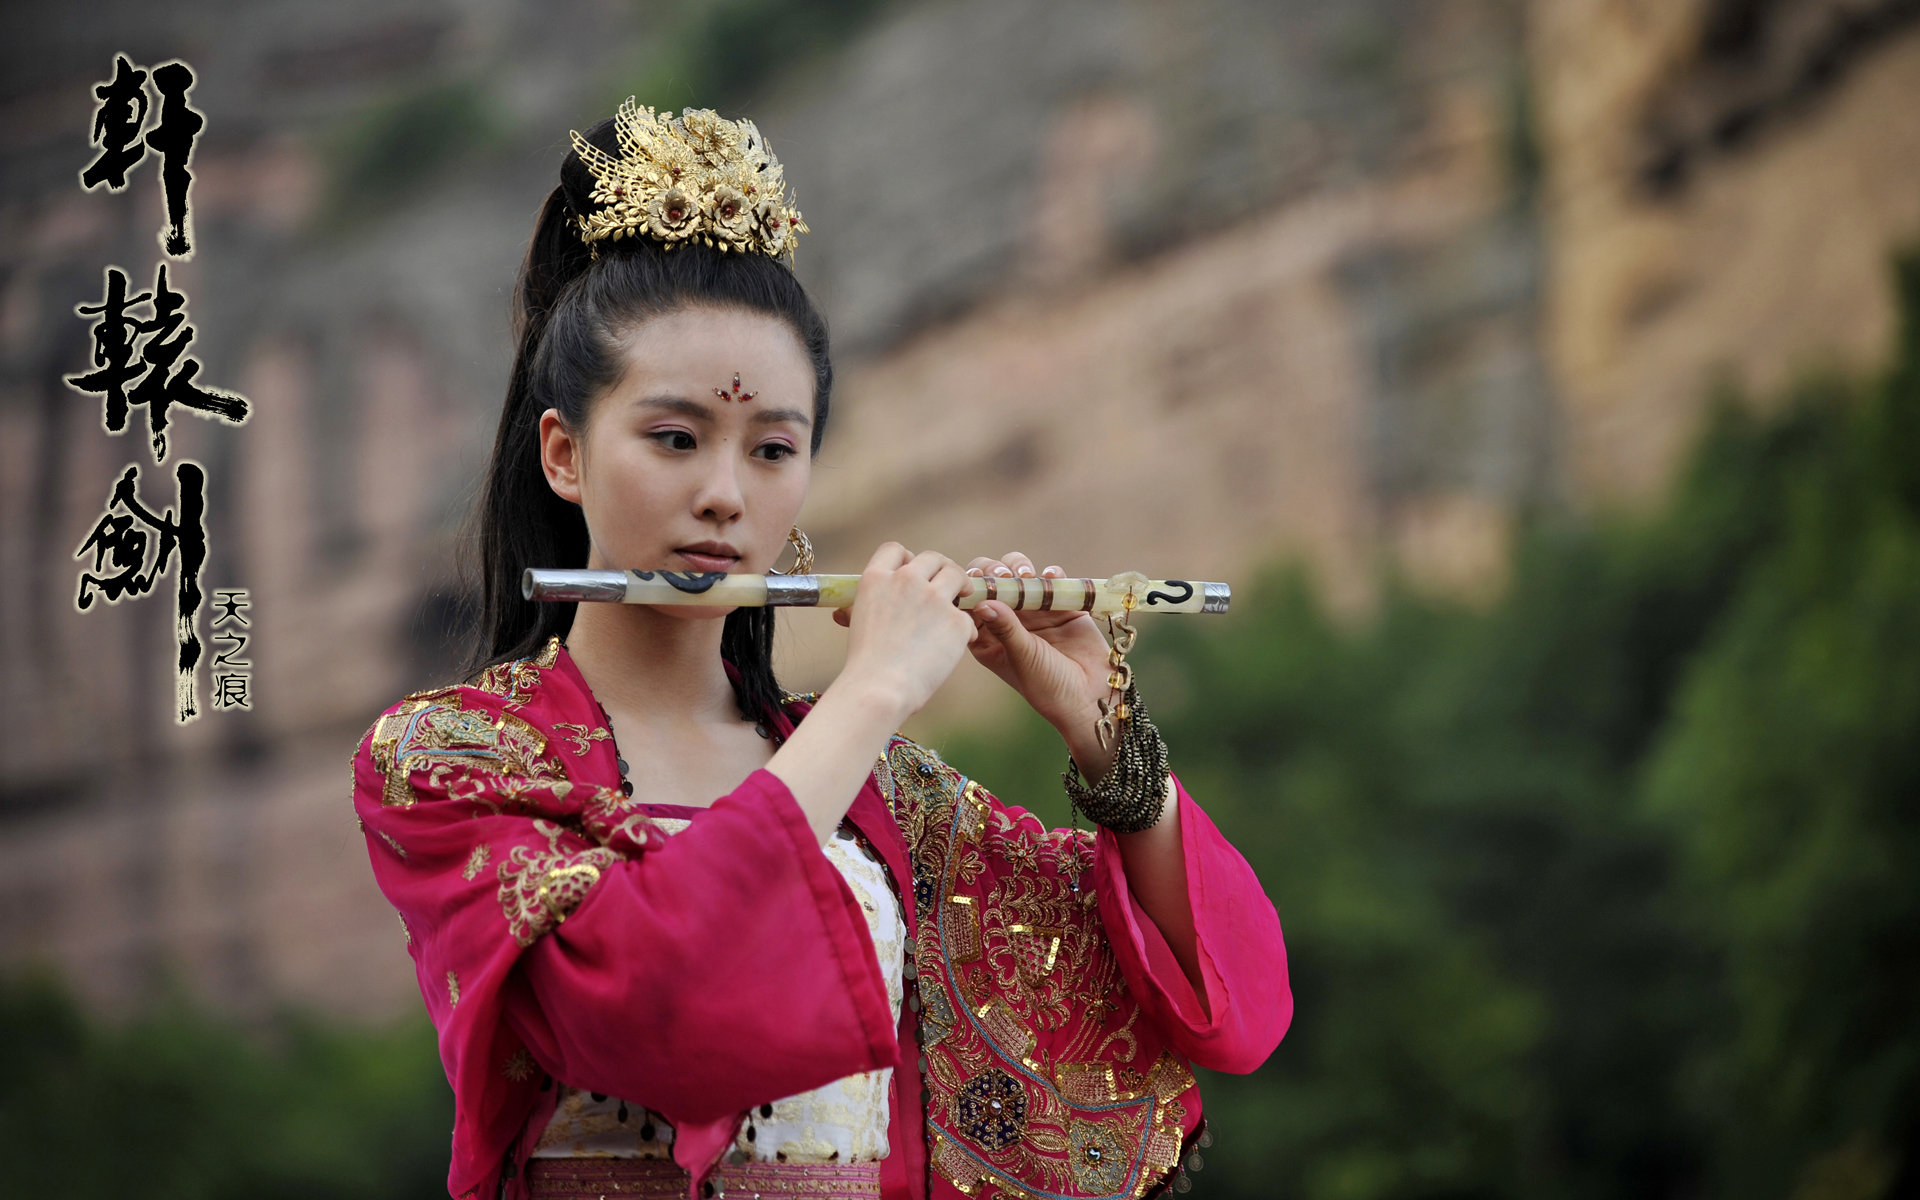 Best Chinese Music Instrumental. Chinese Music Instrumental #5. Песня ши э